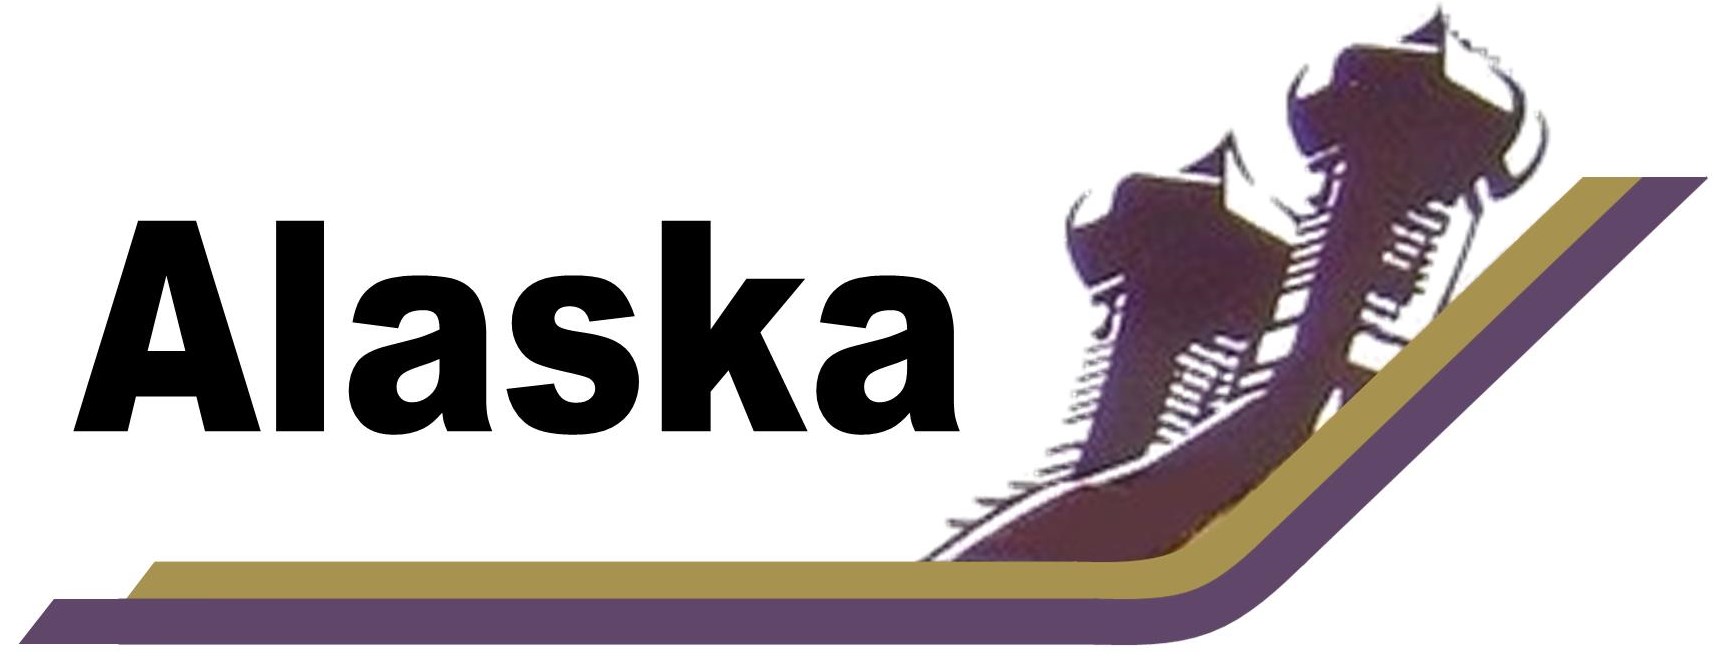 Alaska Airlines
Keywords: Alaska Airlines - Russian Domes